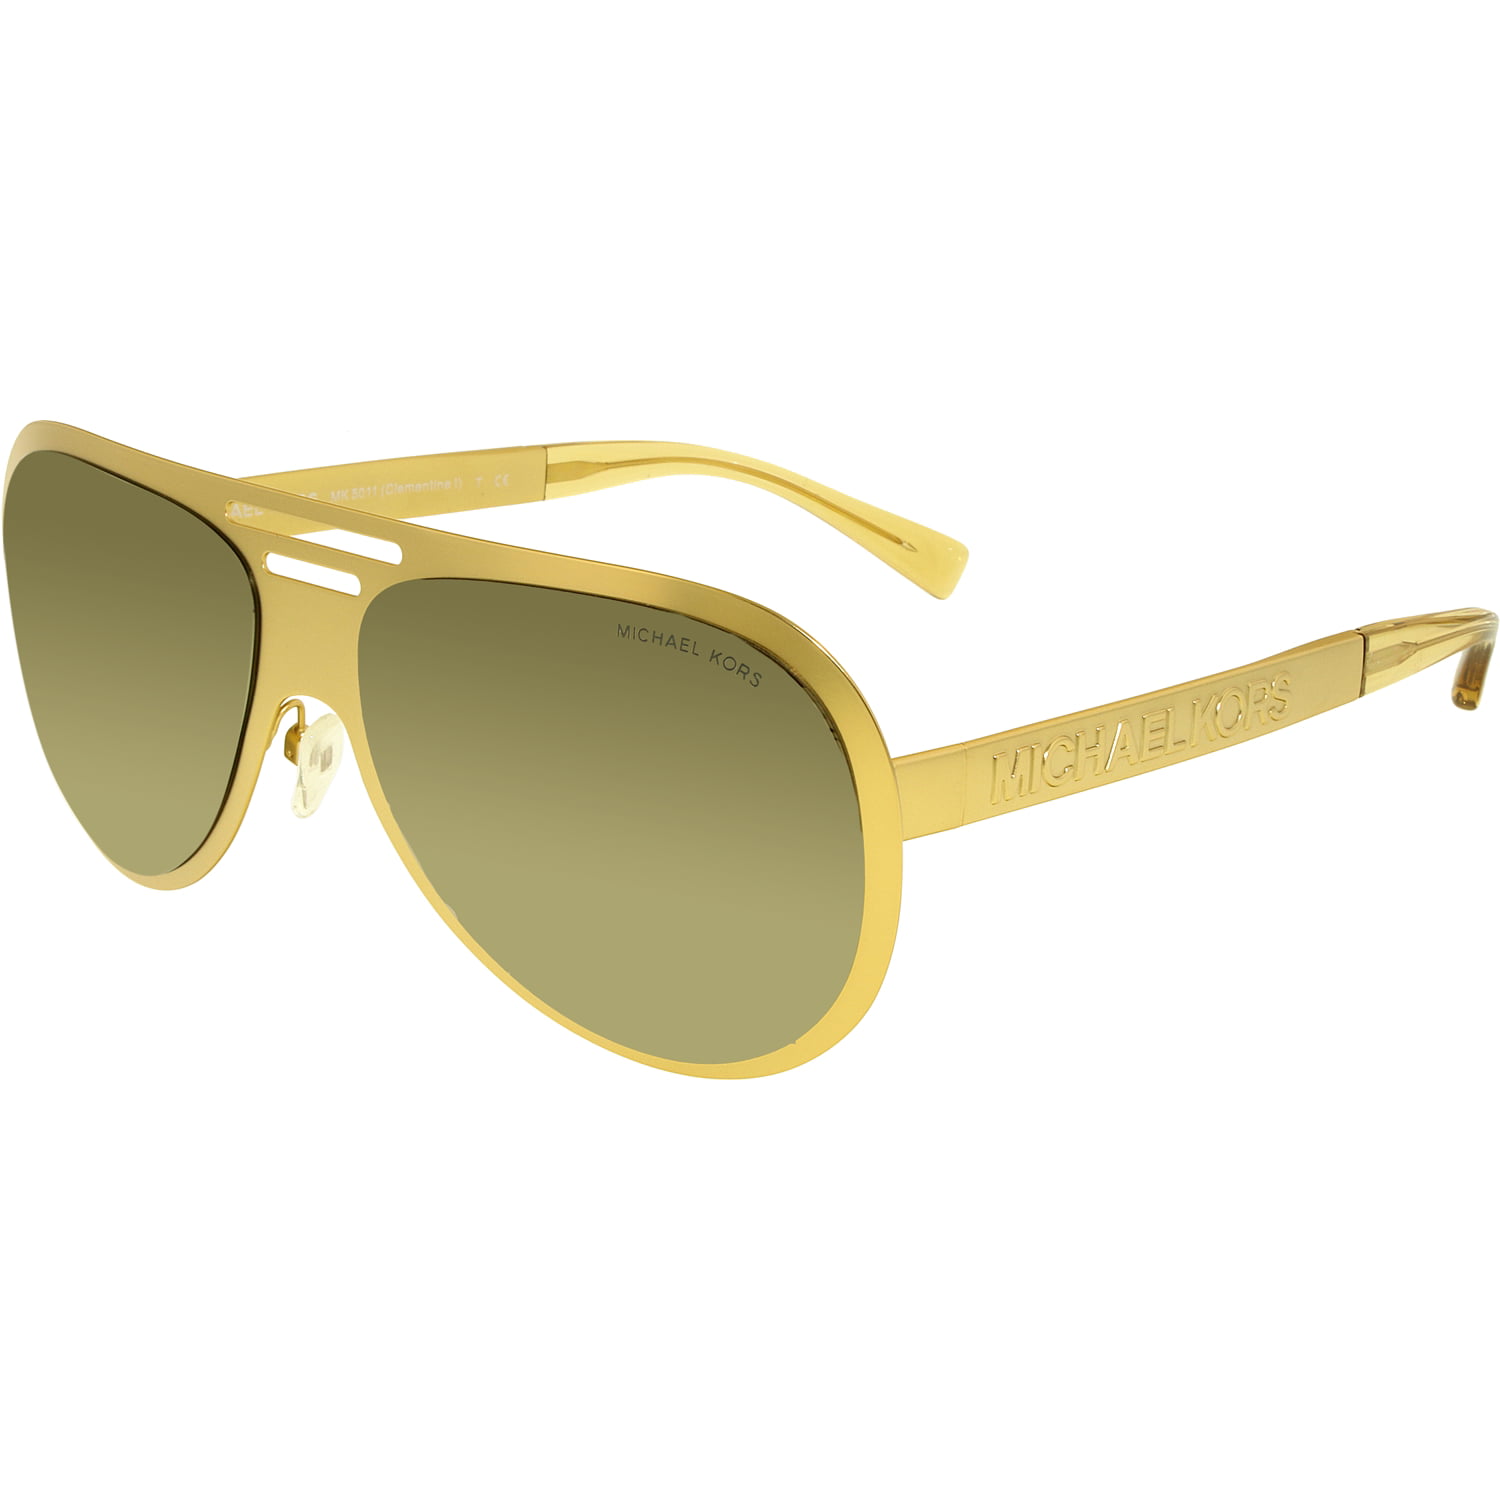 Michael Kors Michael Kors Men S Clementine Mk5011 1062r5 59 Gold Aviator Sunglasses